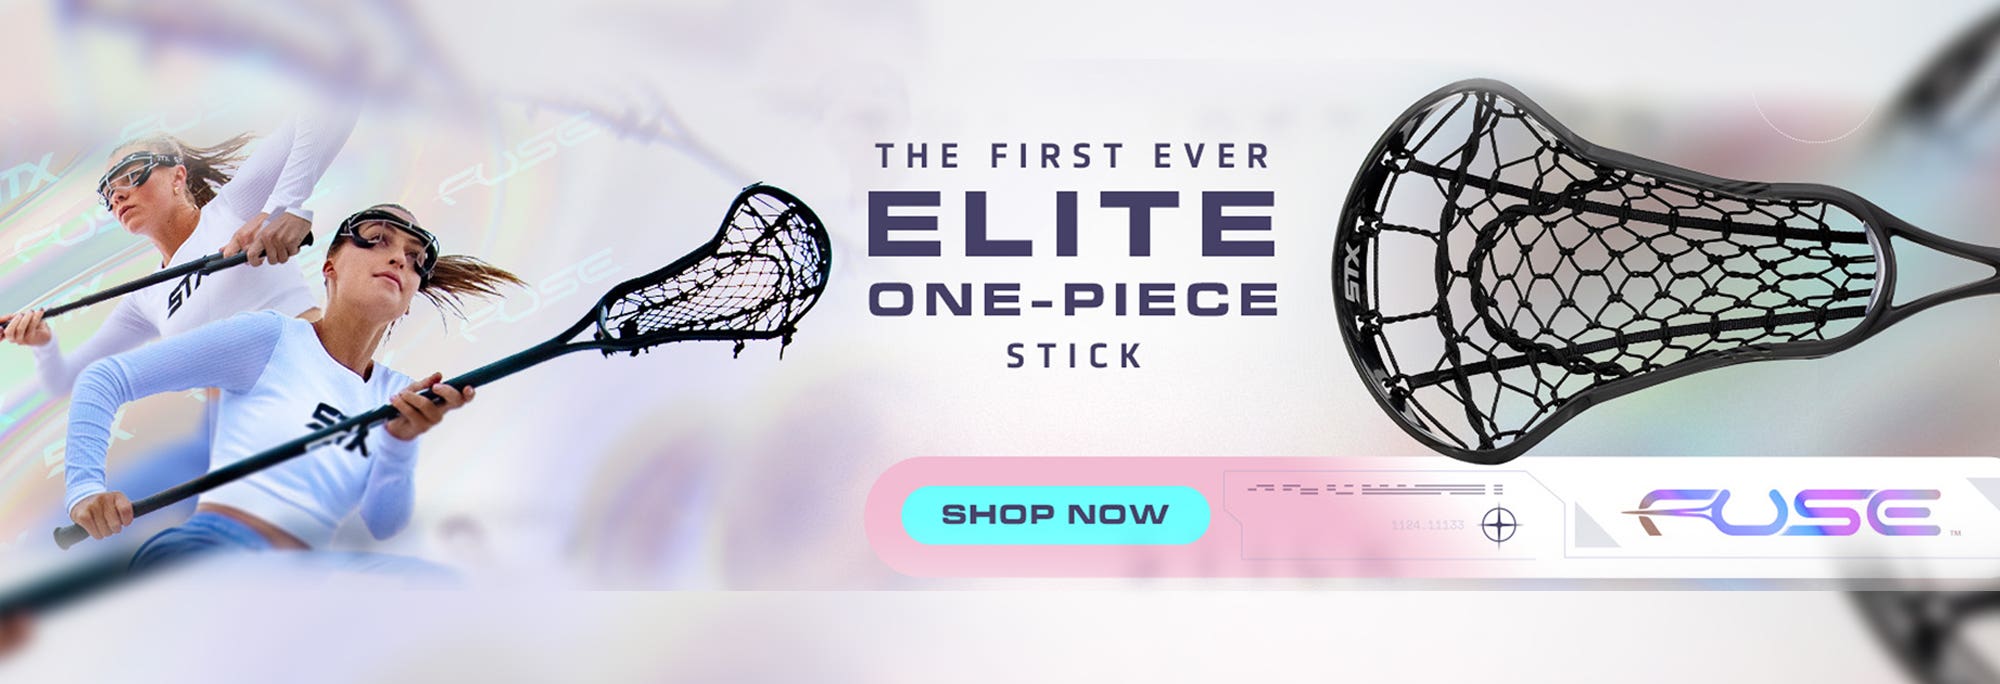 STX Fuse Complete Women's Lacrosse Stick